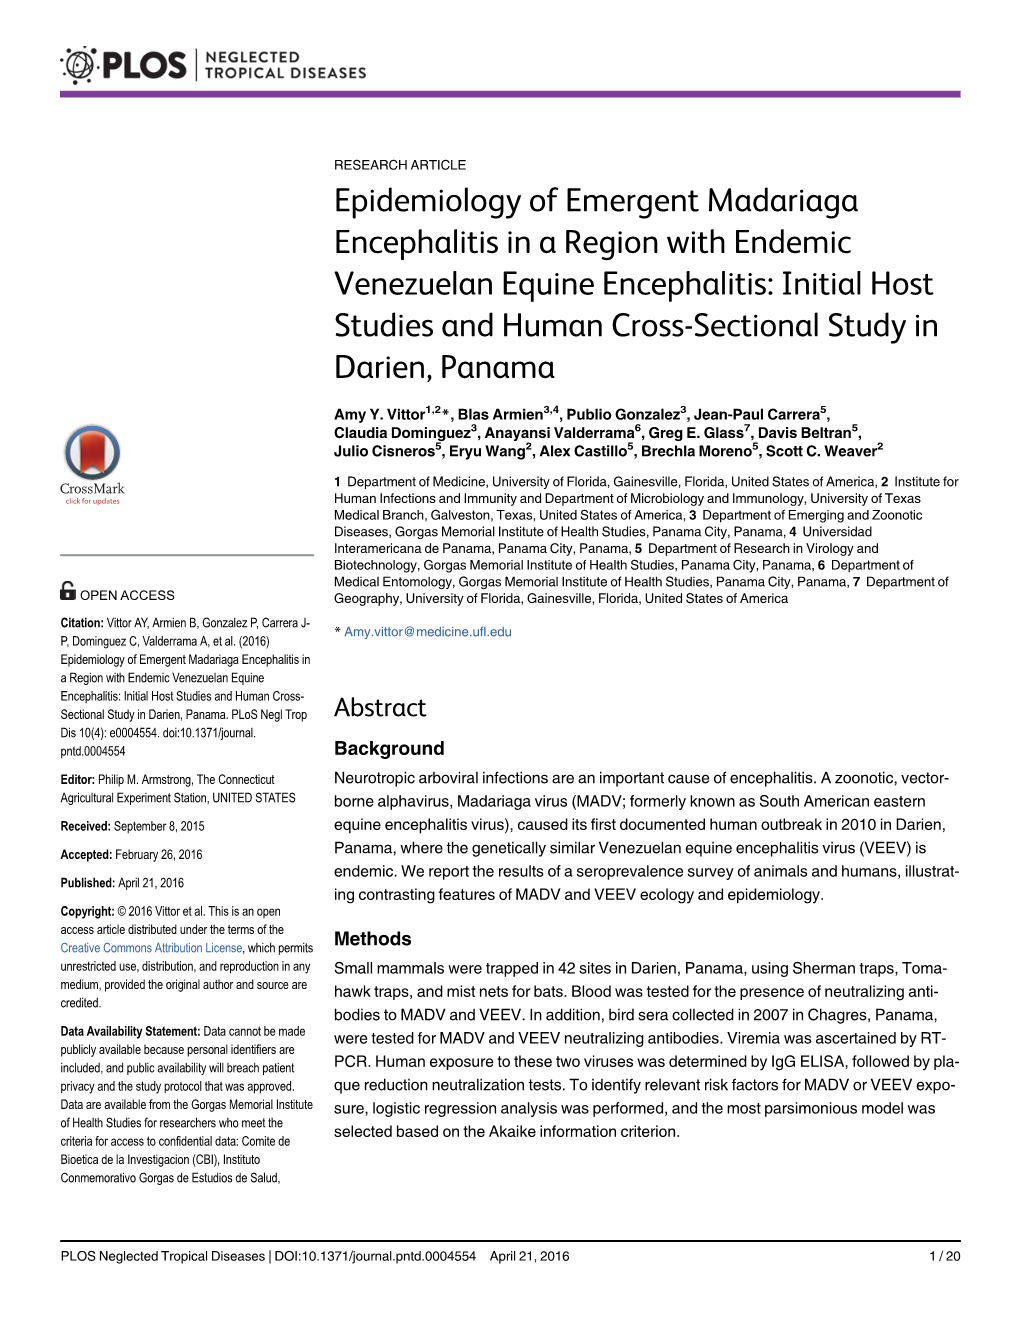 Epidemiology of Emergent Madariaga Encephalitis in a Region With